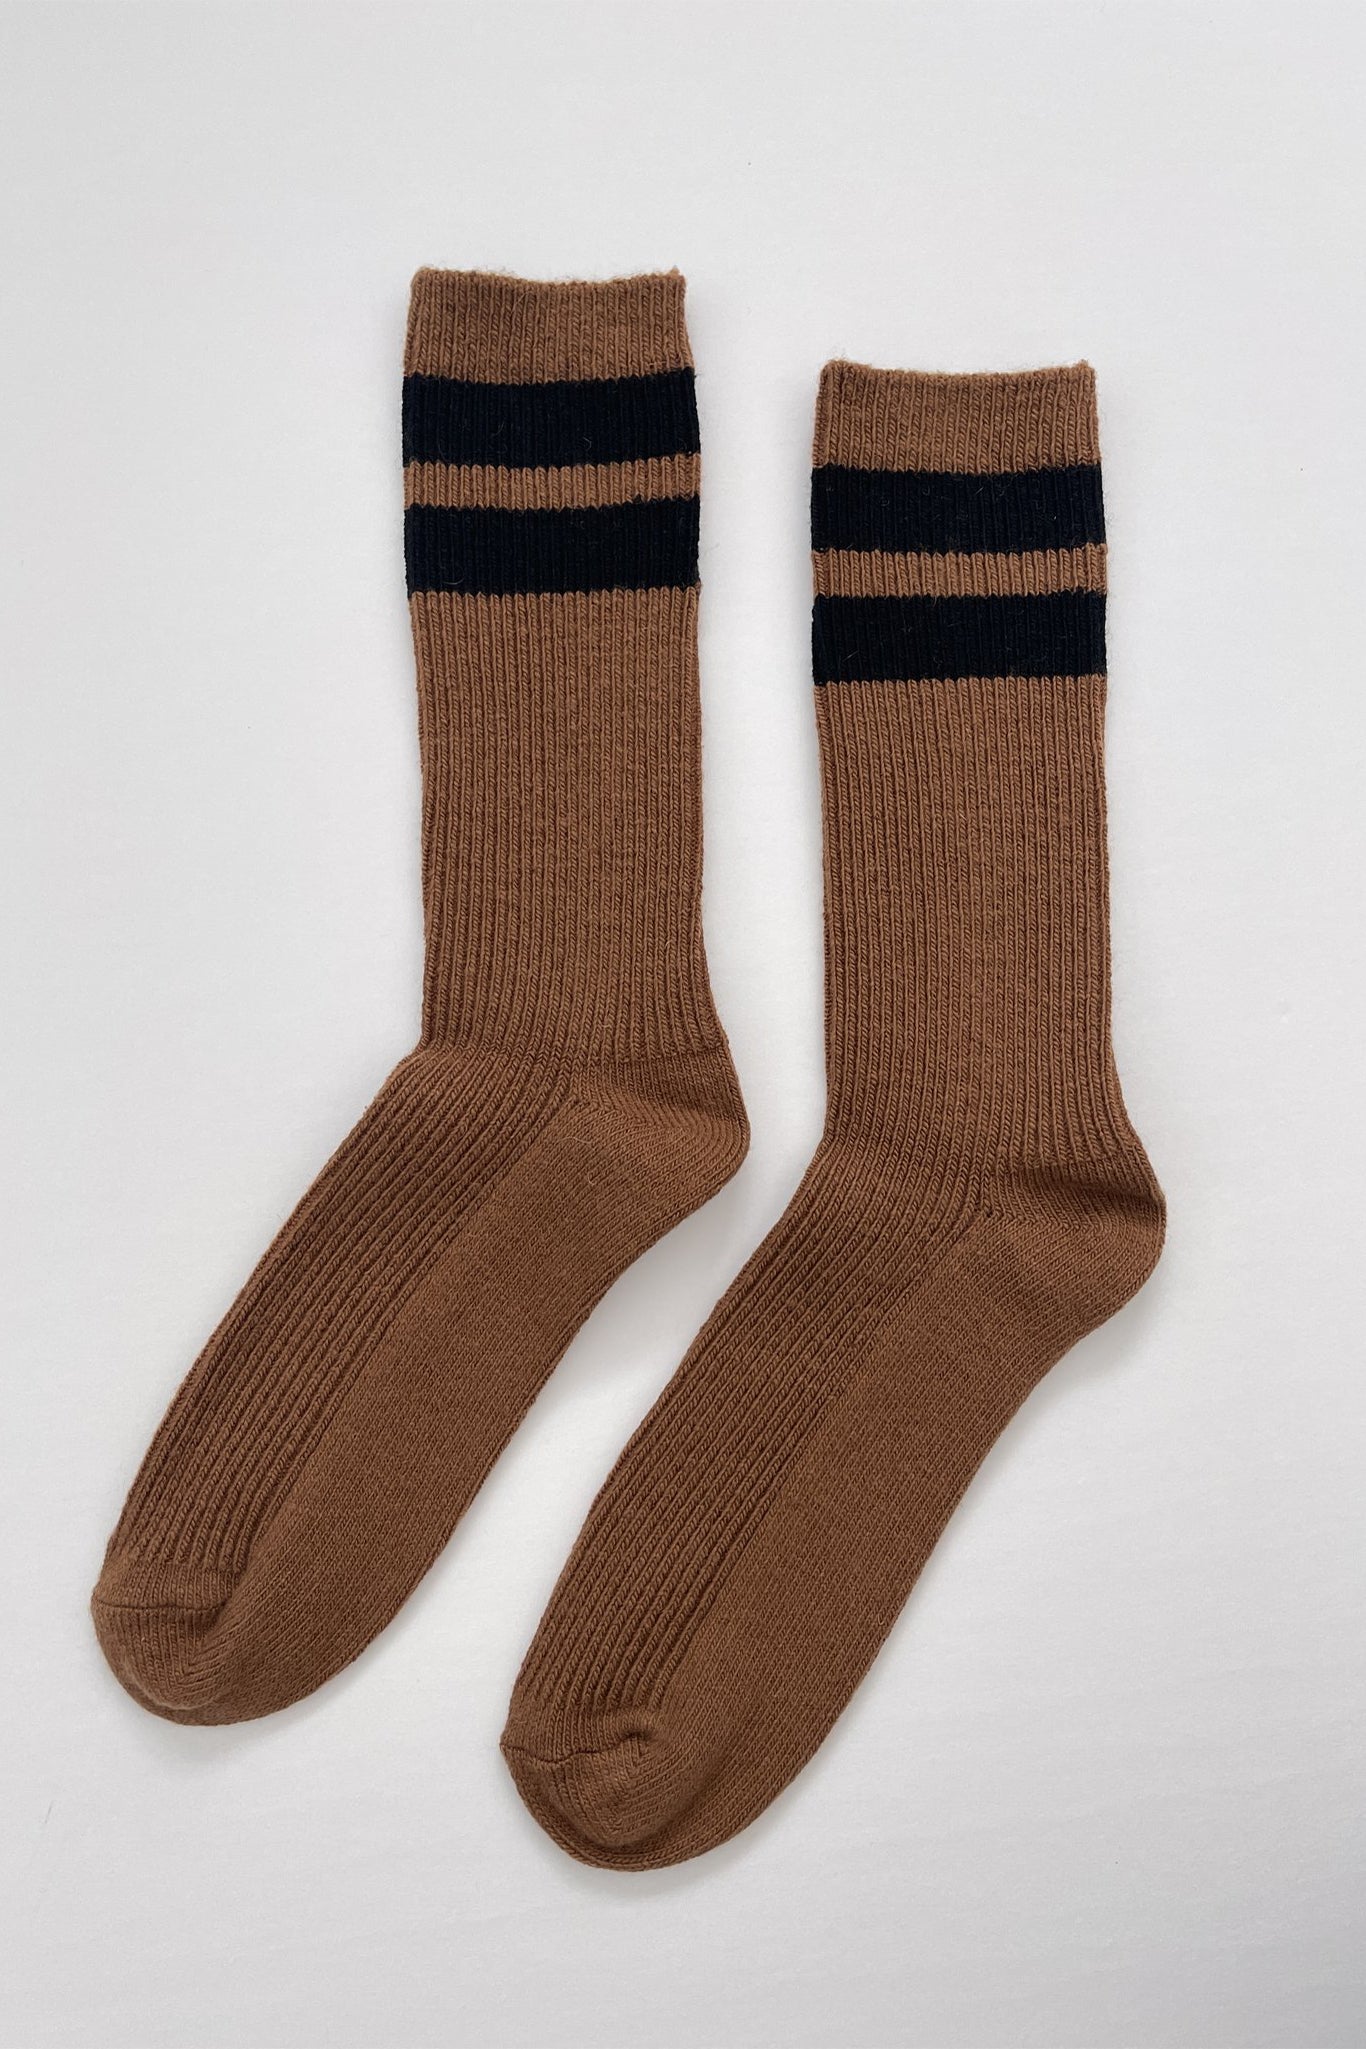 Varsity Collection - Socks - Proper No. Twelve Irish Whiskey